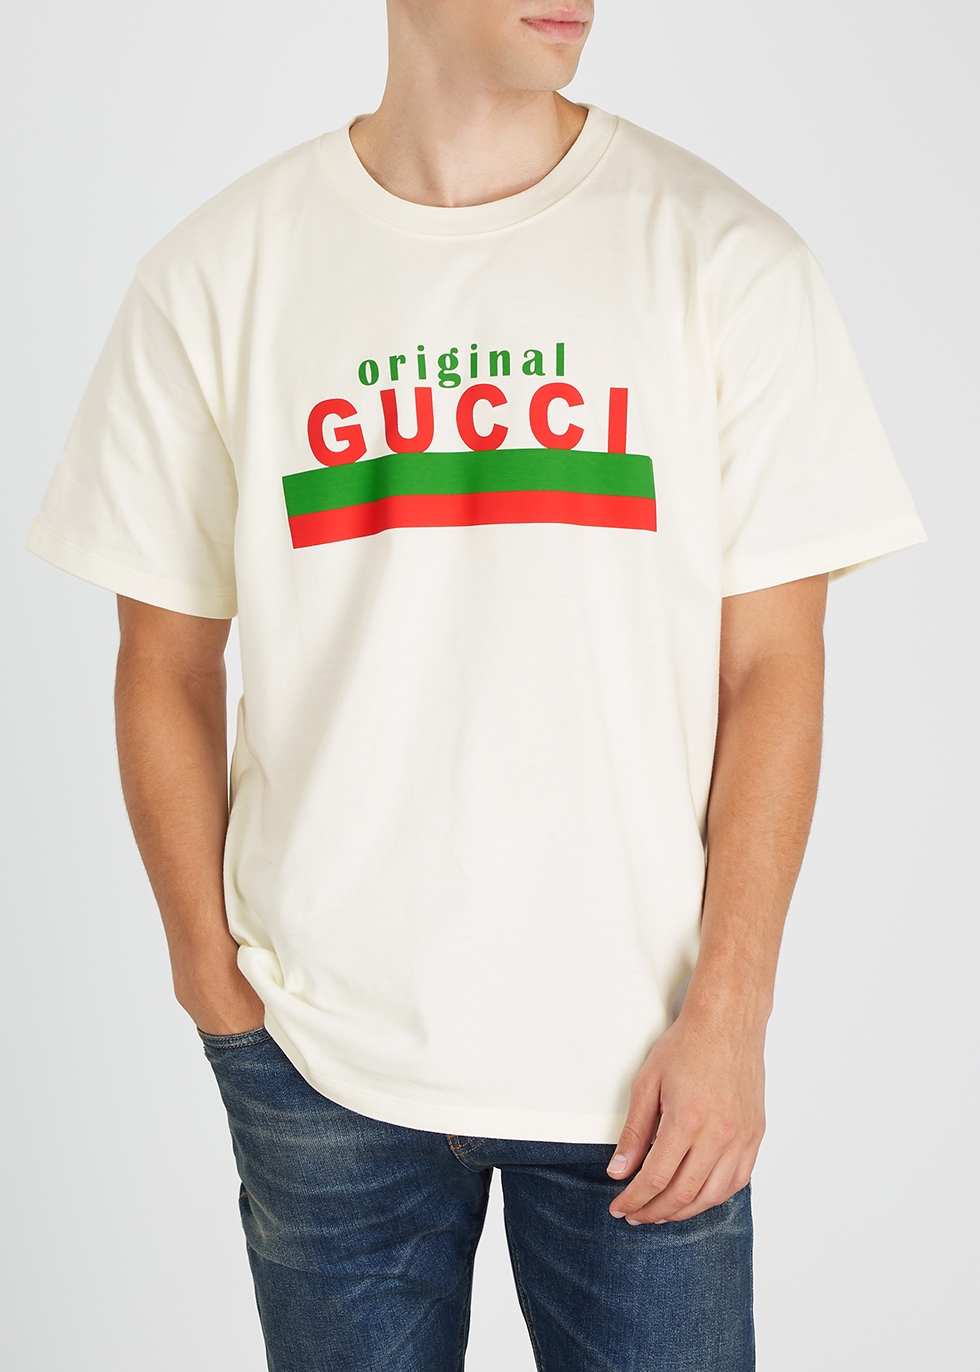 gucci shirt original